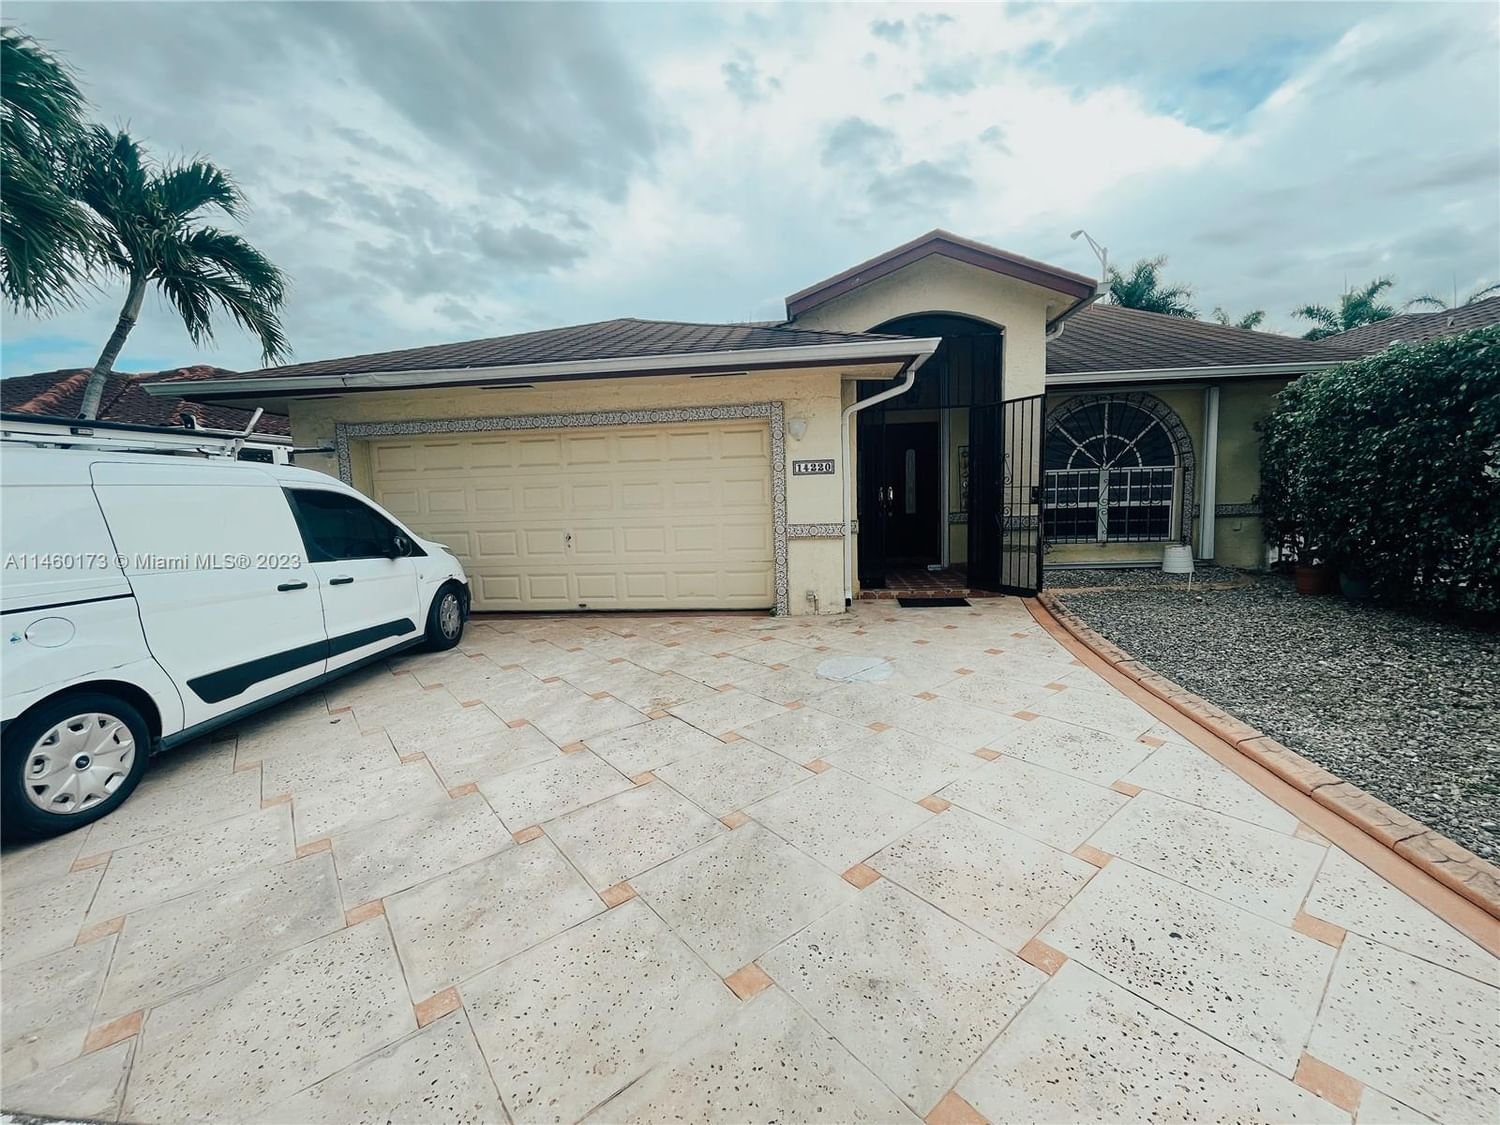 Real estate property located at 14220 55th St, Miami-Dade County, Miami, FL